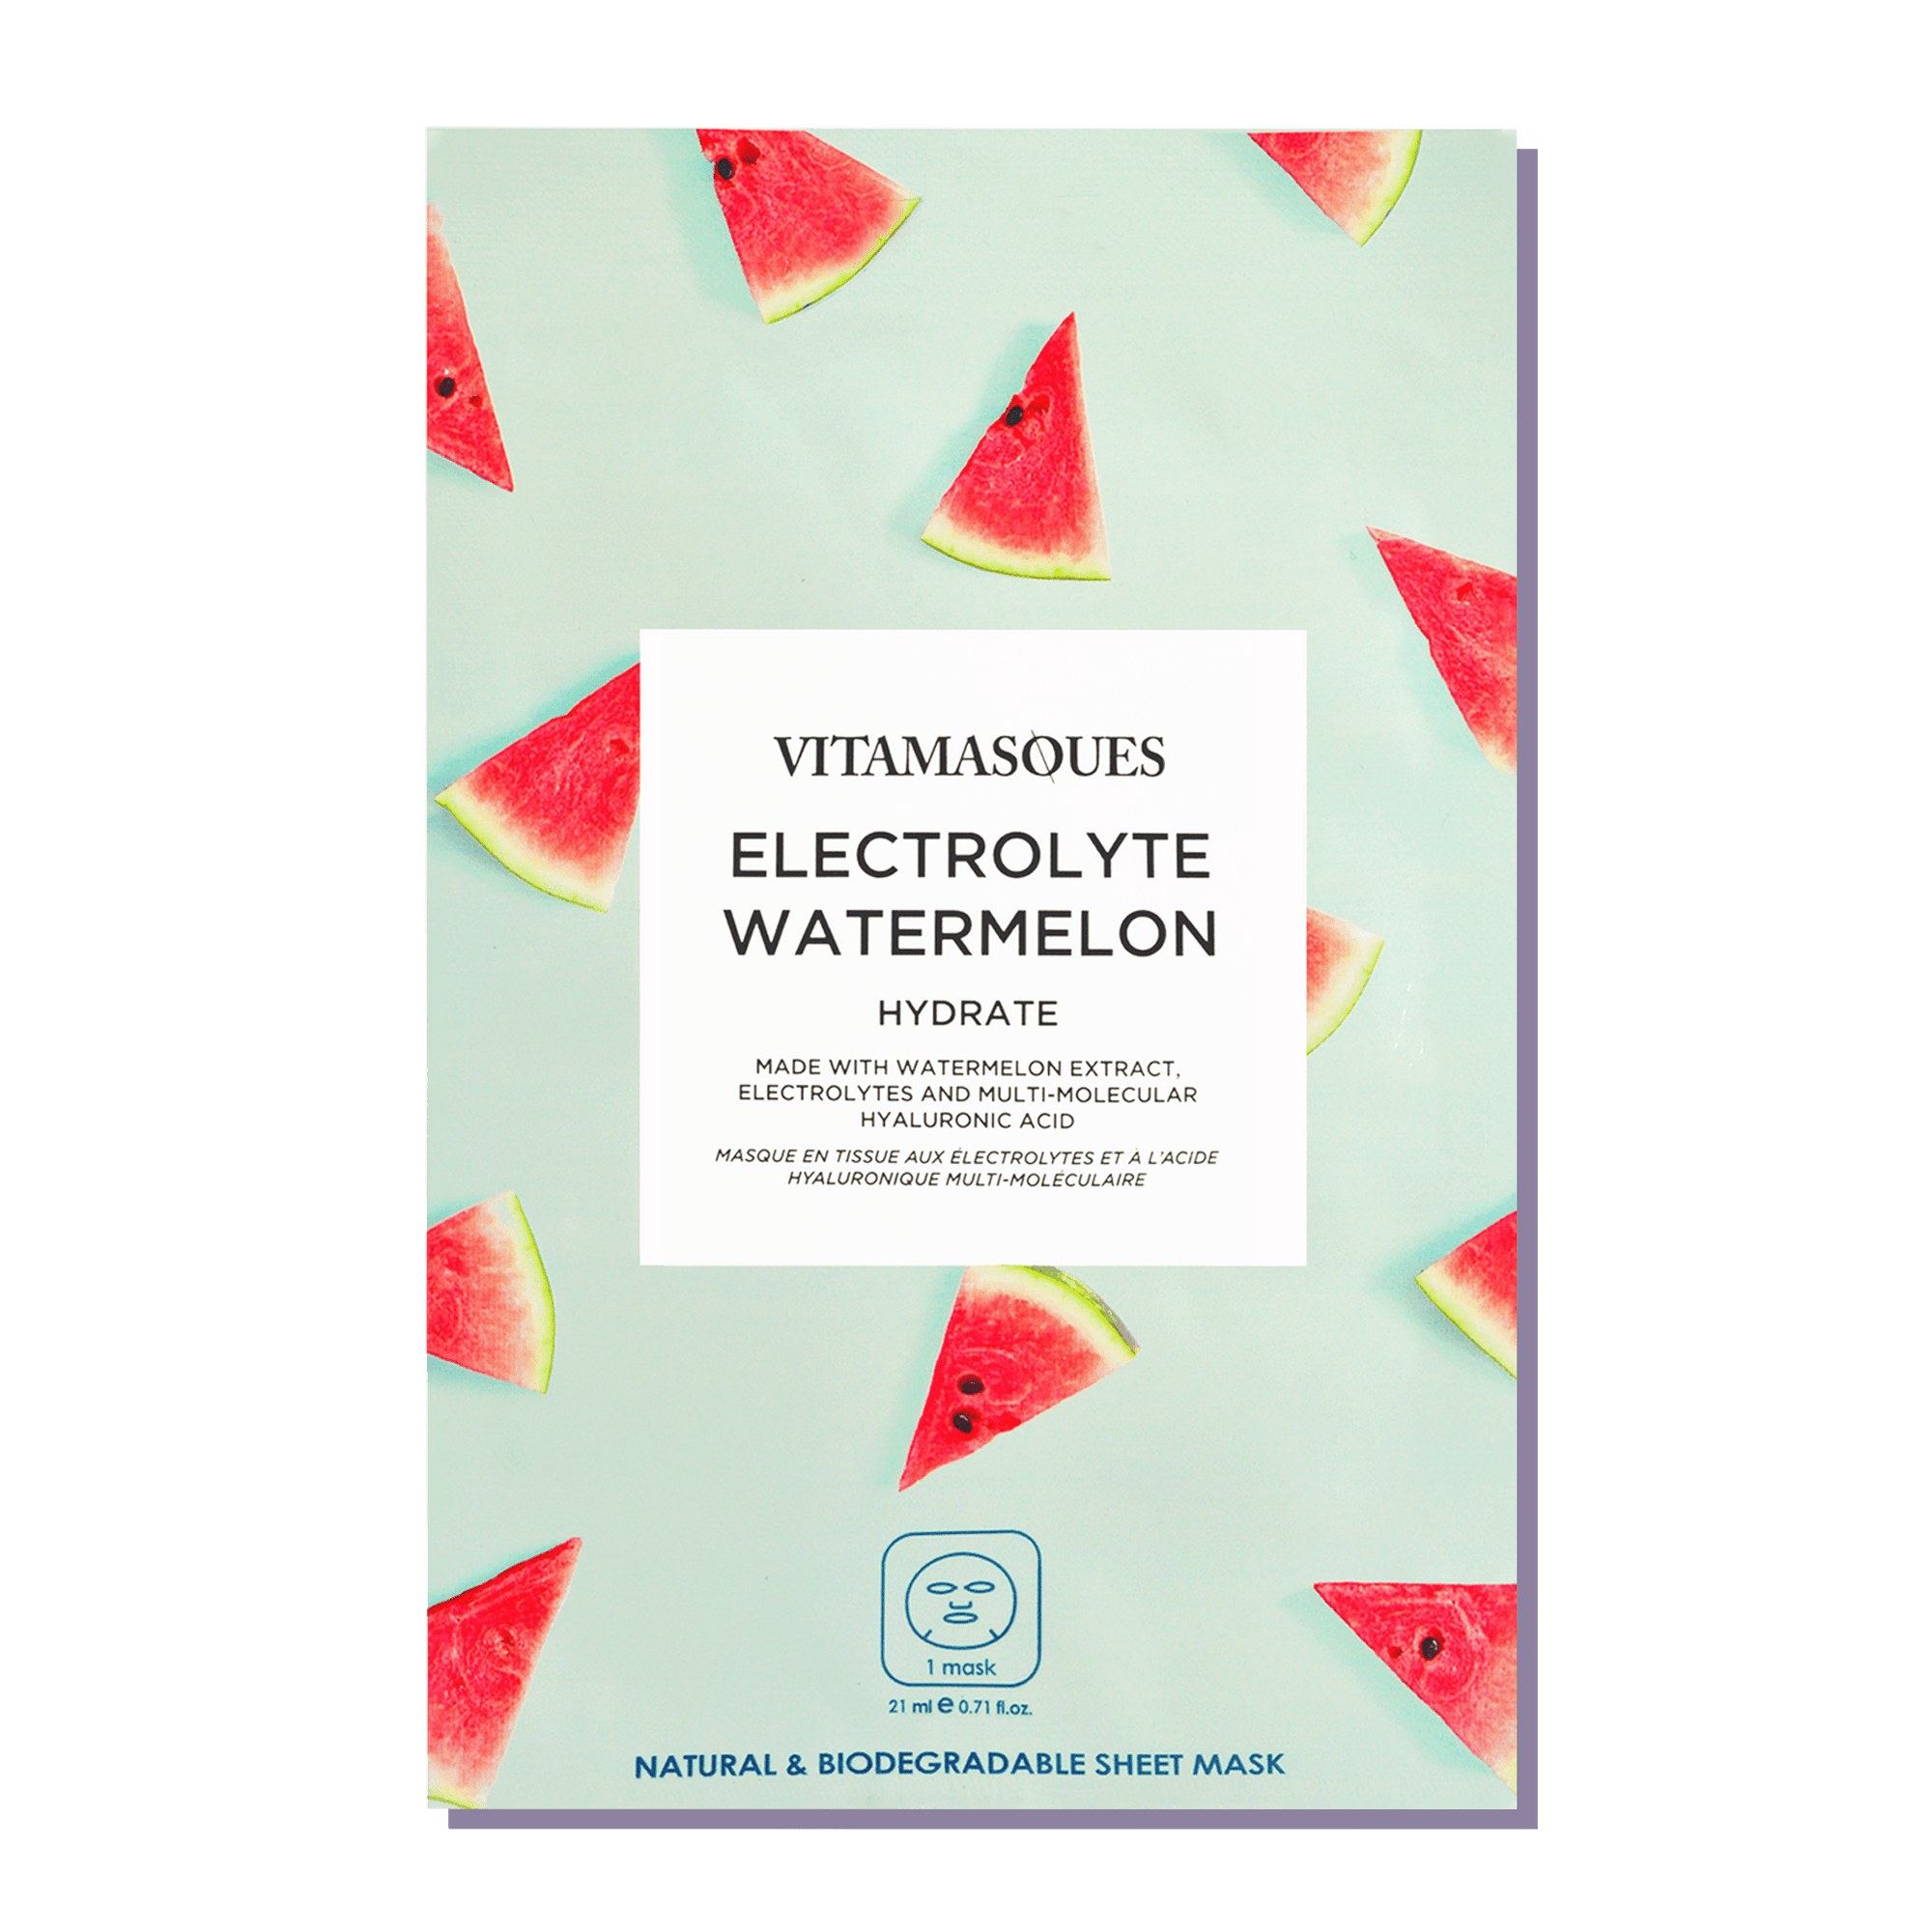 Electrolyte Watermelon Face Sheet Mask - Vitamasques